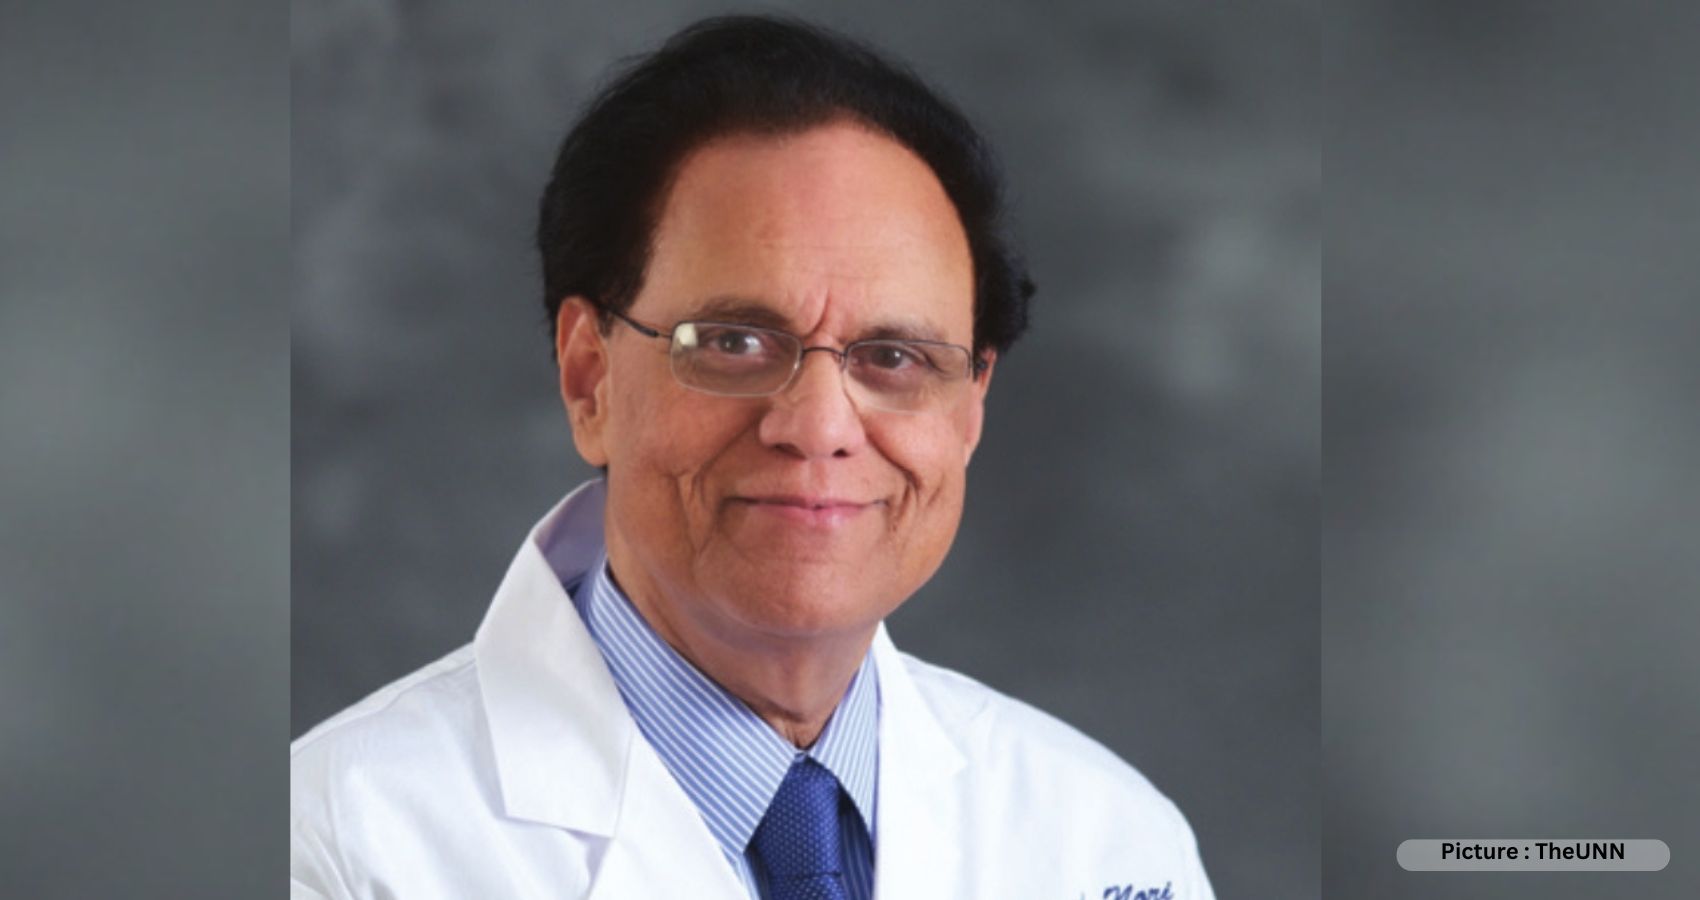 Dr. Dattatreyudu Nori’s Take On Cancer Care In India